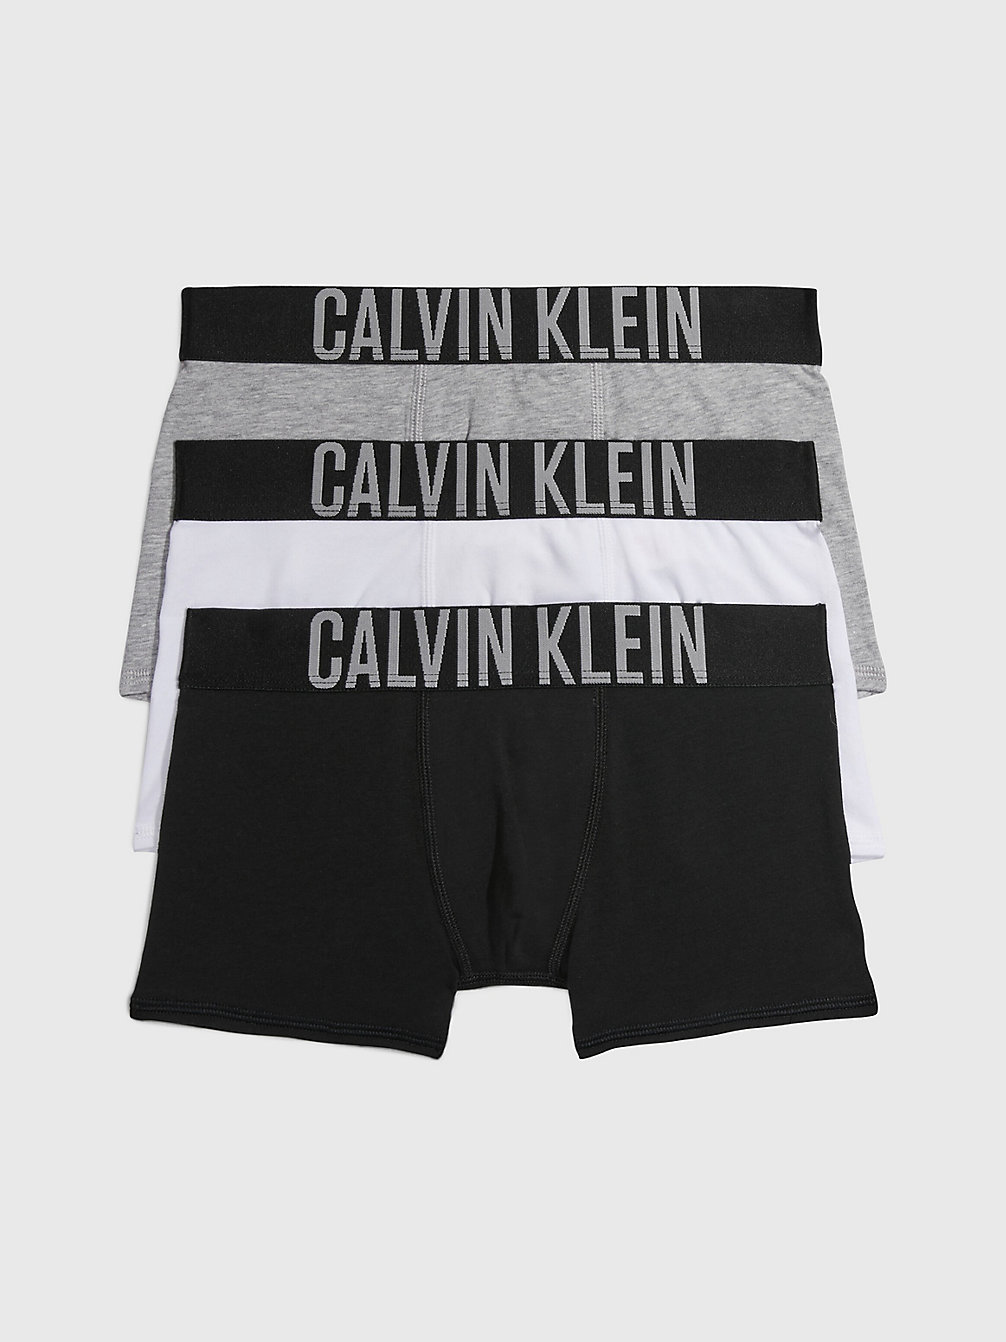 PVHBLACK/GREYHETHR/PVHWHITE Lot De 3 Boxers Pour Garçon - Intense Power undefined garcons Calvin Klein